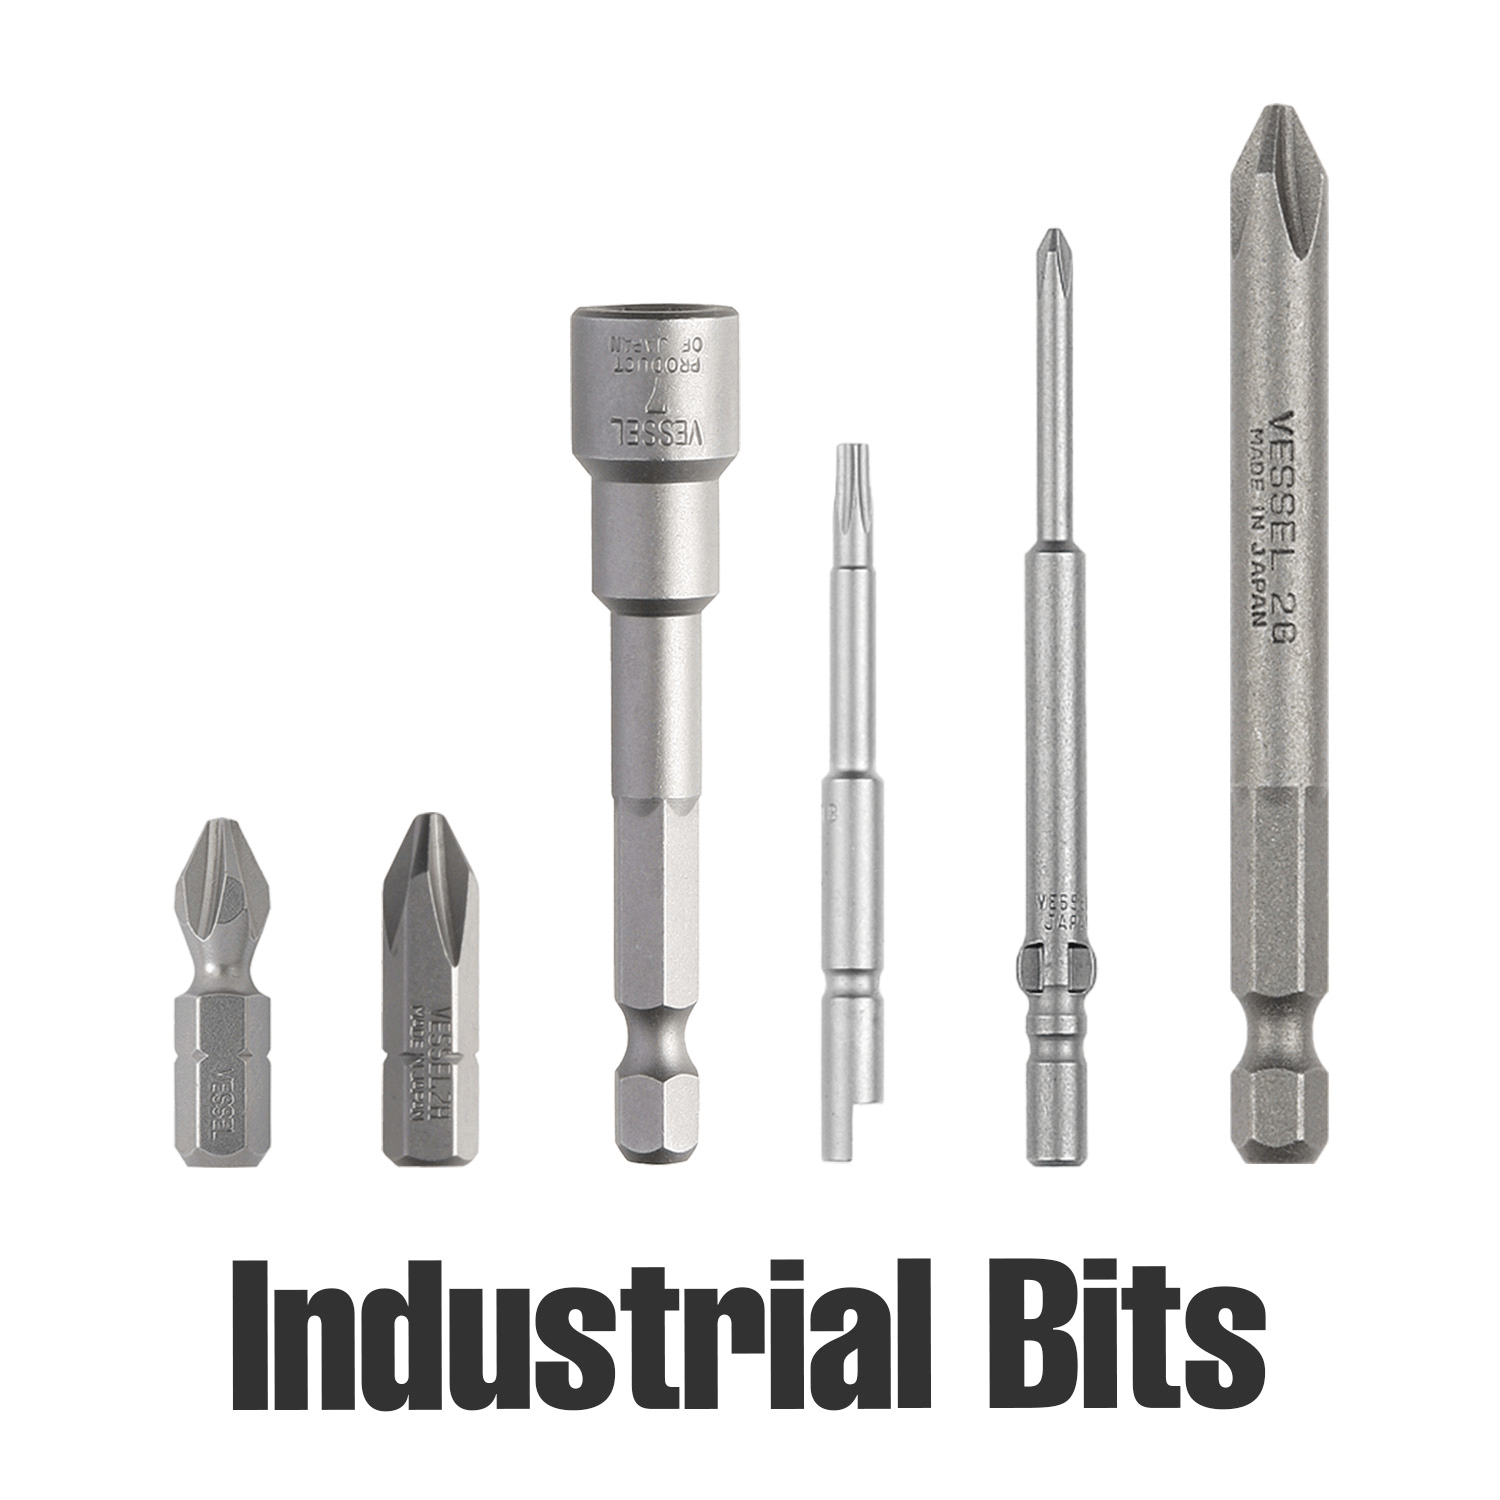 Industrial Bits